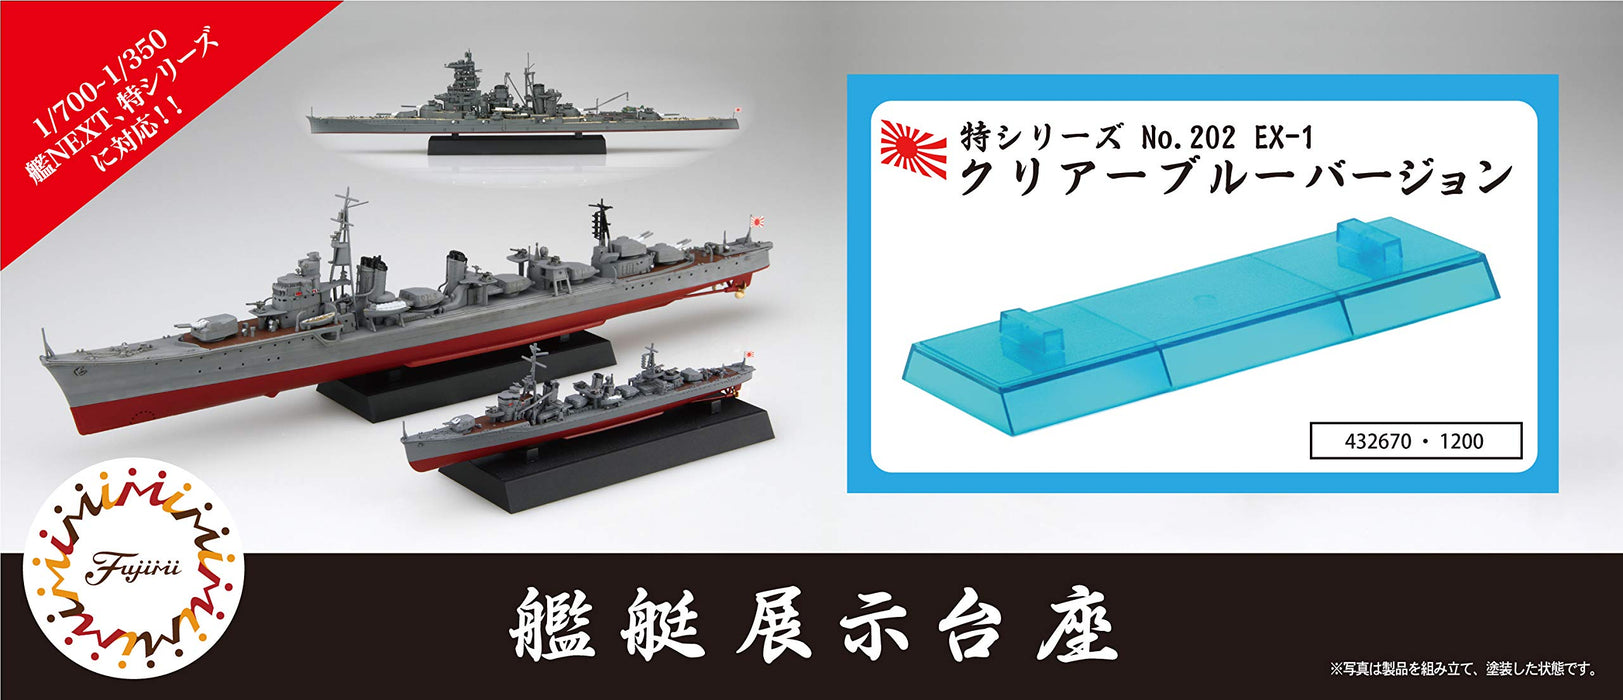 FUJIMI Toku 202 Ex-1 Warship Display Base Clear Blue Ver pour échelle 1/700 ou 1/350